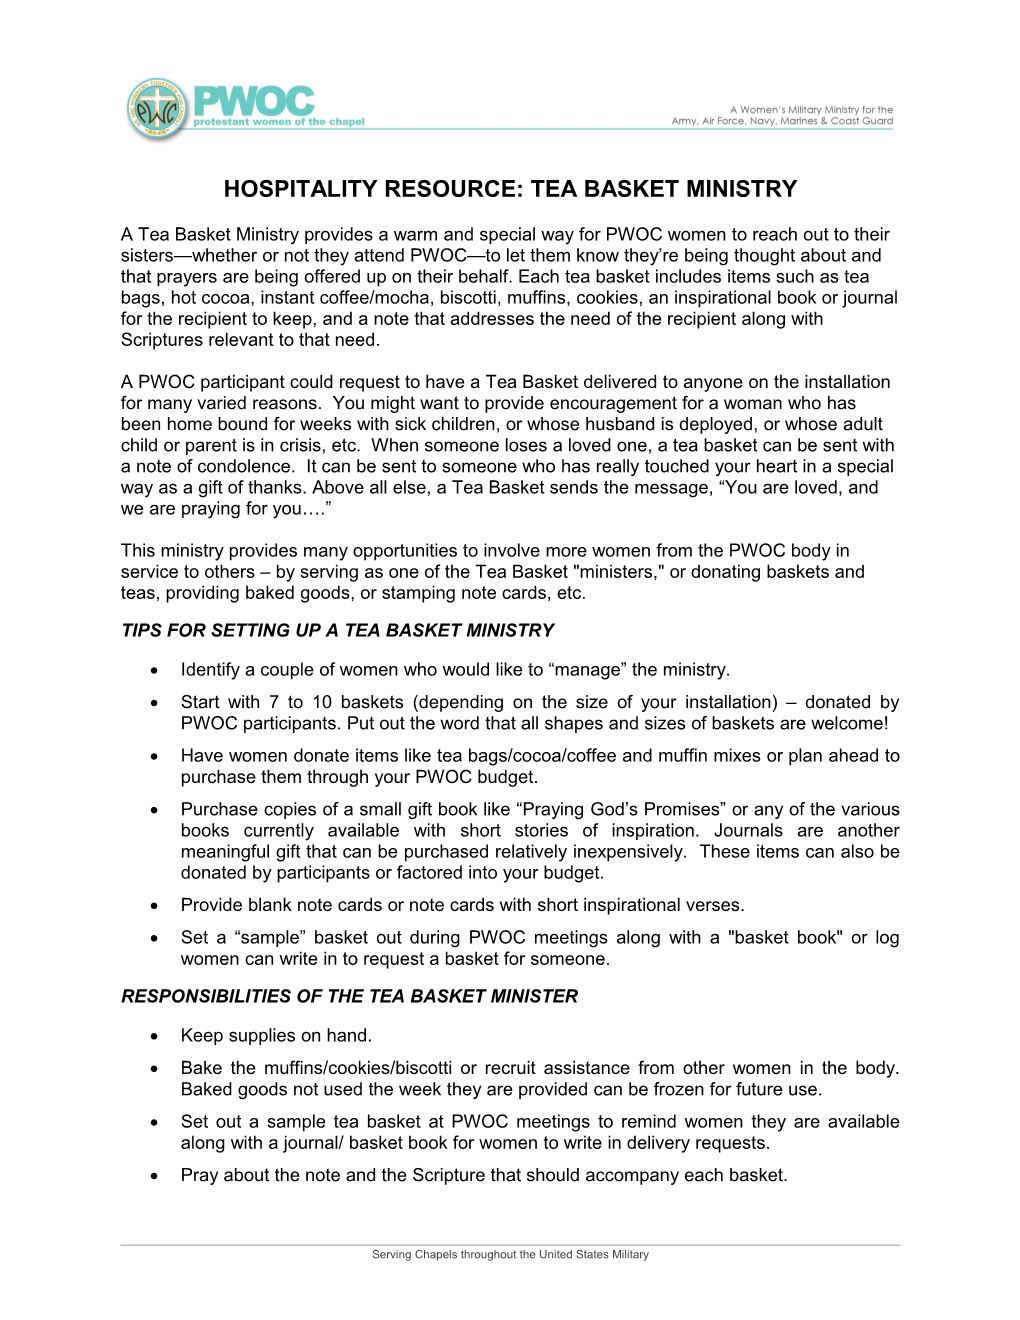 Hospitality Resource: Tea Basket Ministry